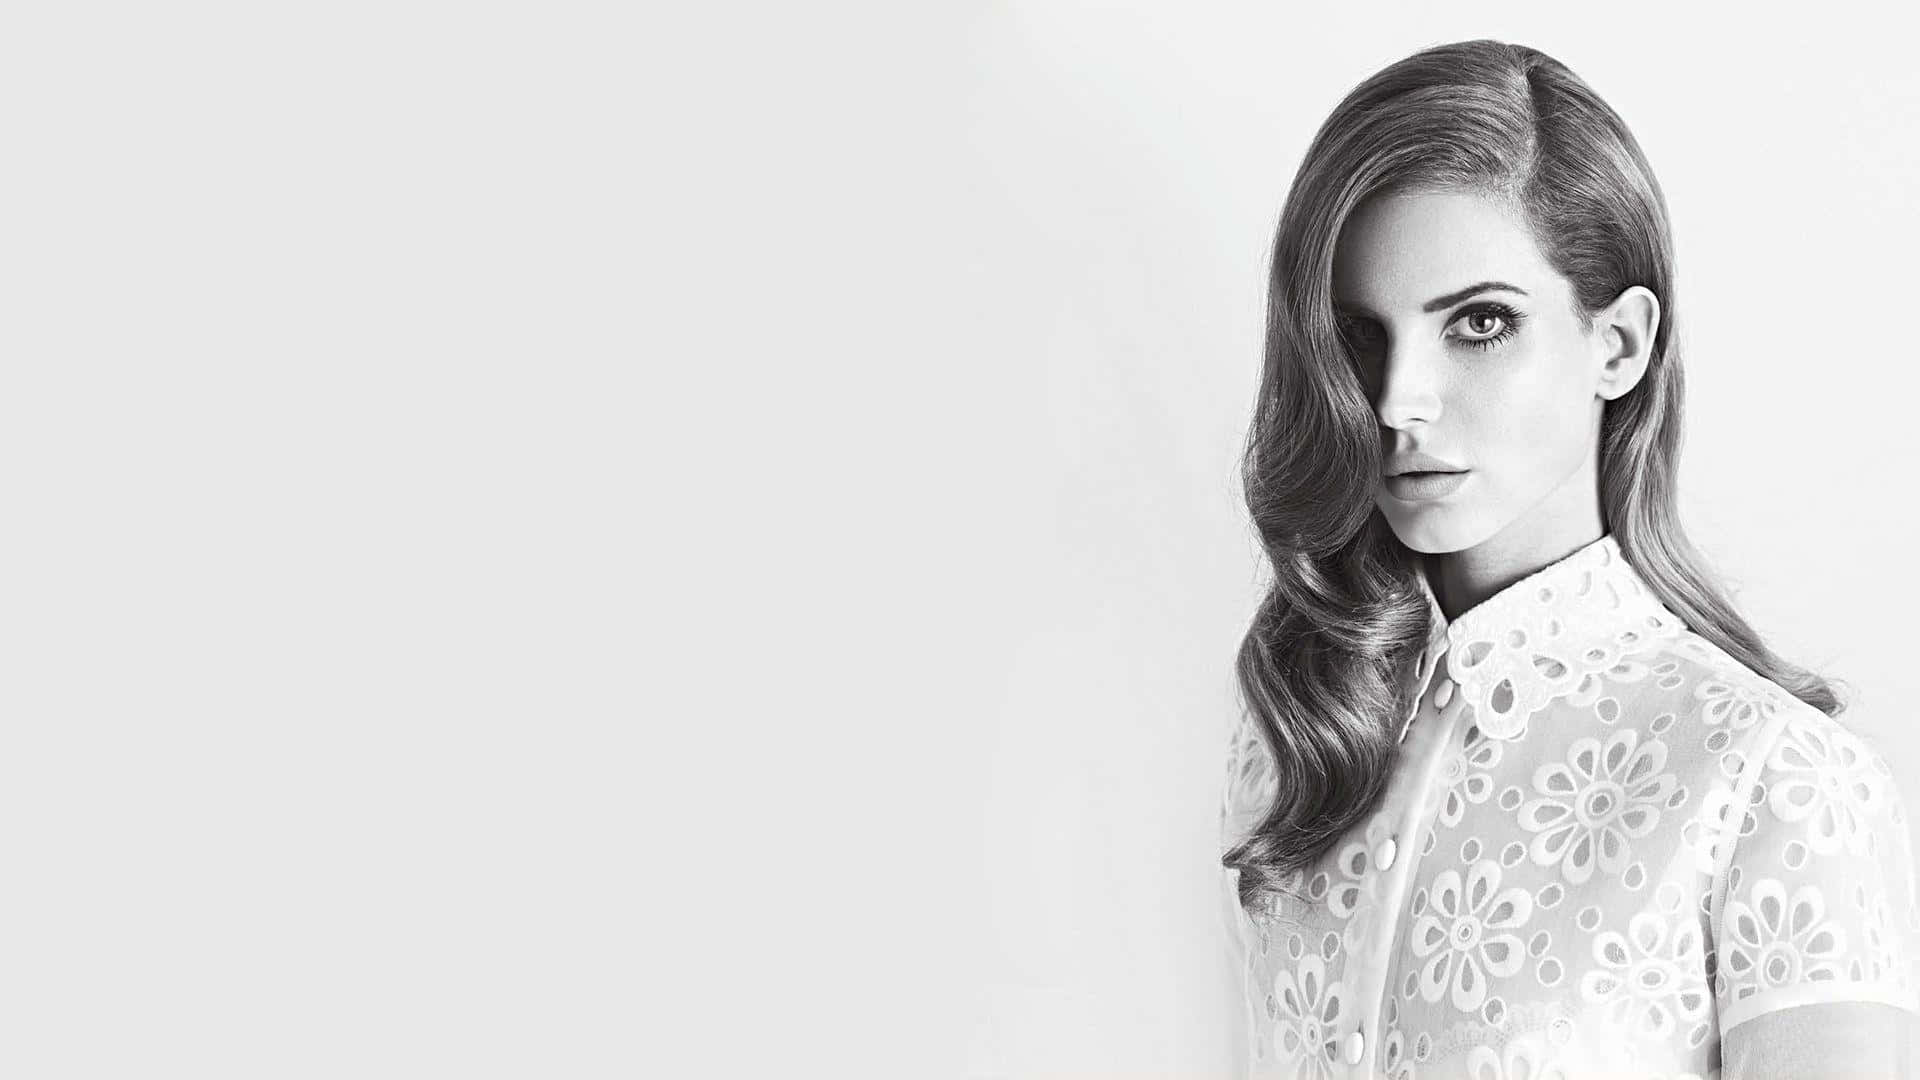 Singer Lana Del Rey Performing Live On Stage Wallpaper